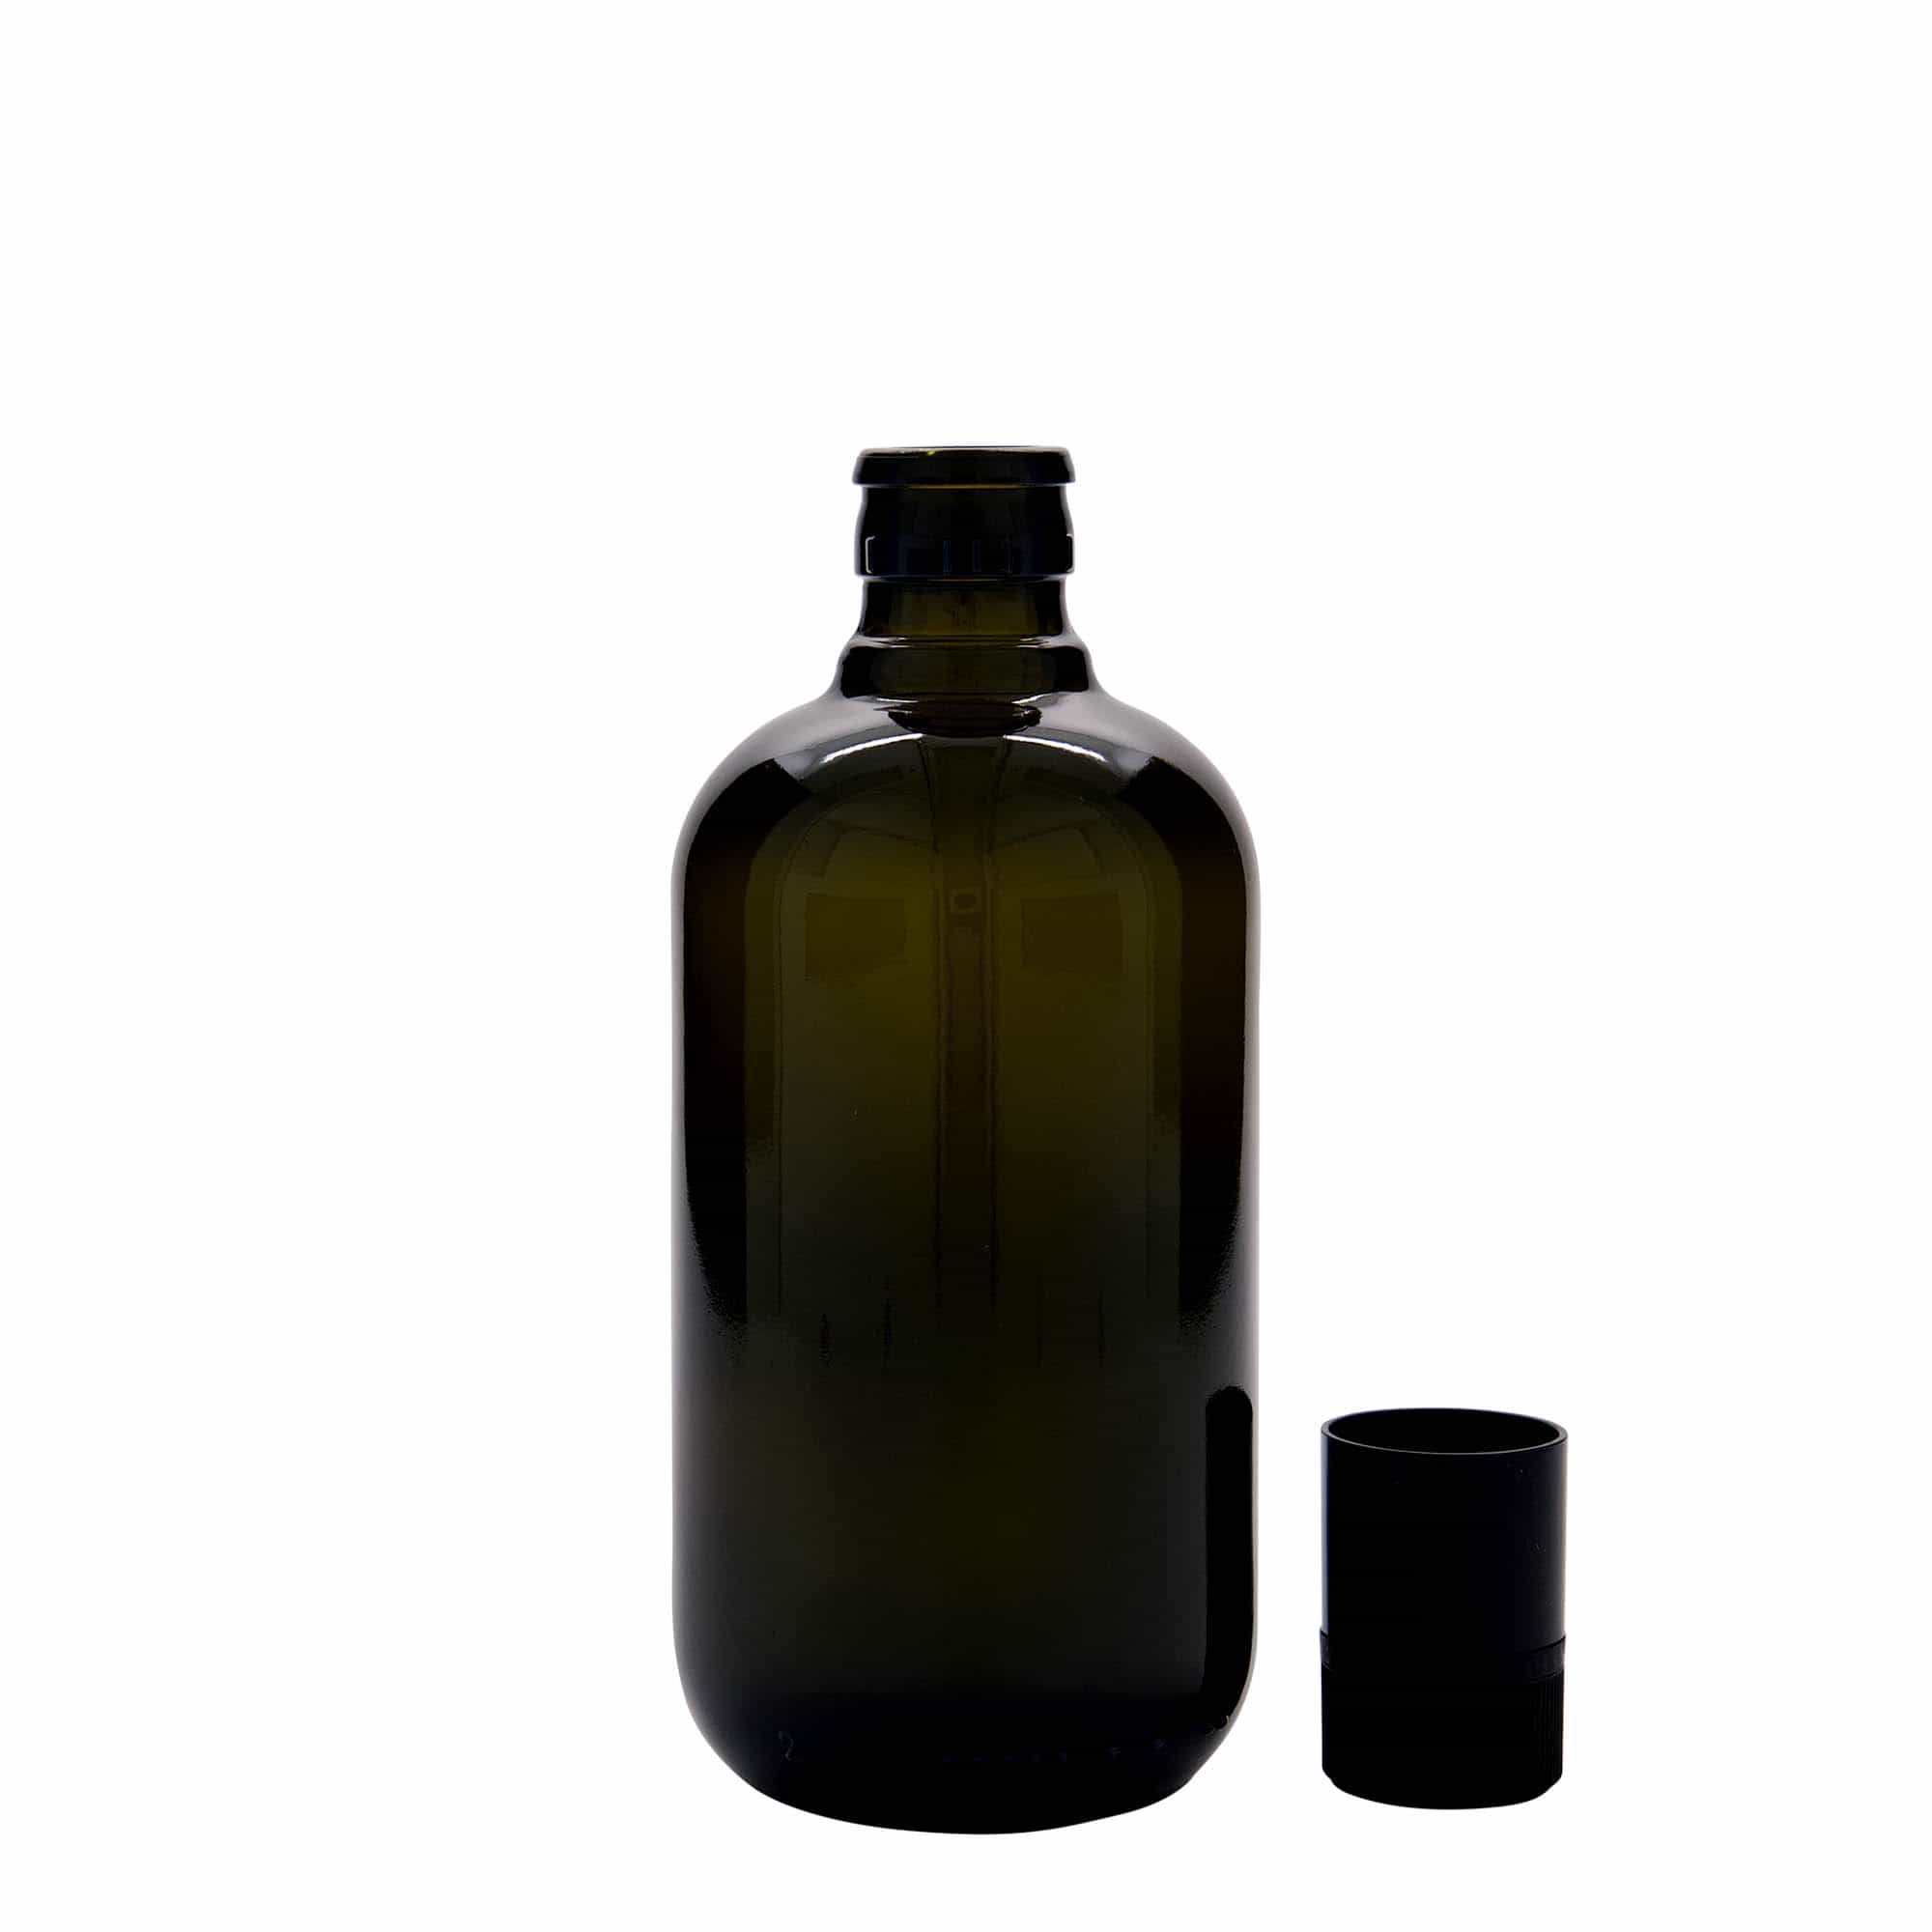 500 ml eddike-/olieflaske 'Biolio', glas, antikgrøn, åbning: DOP